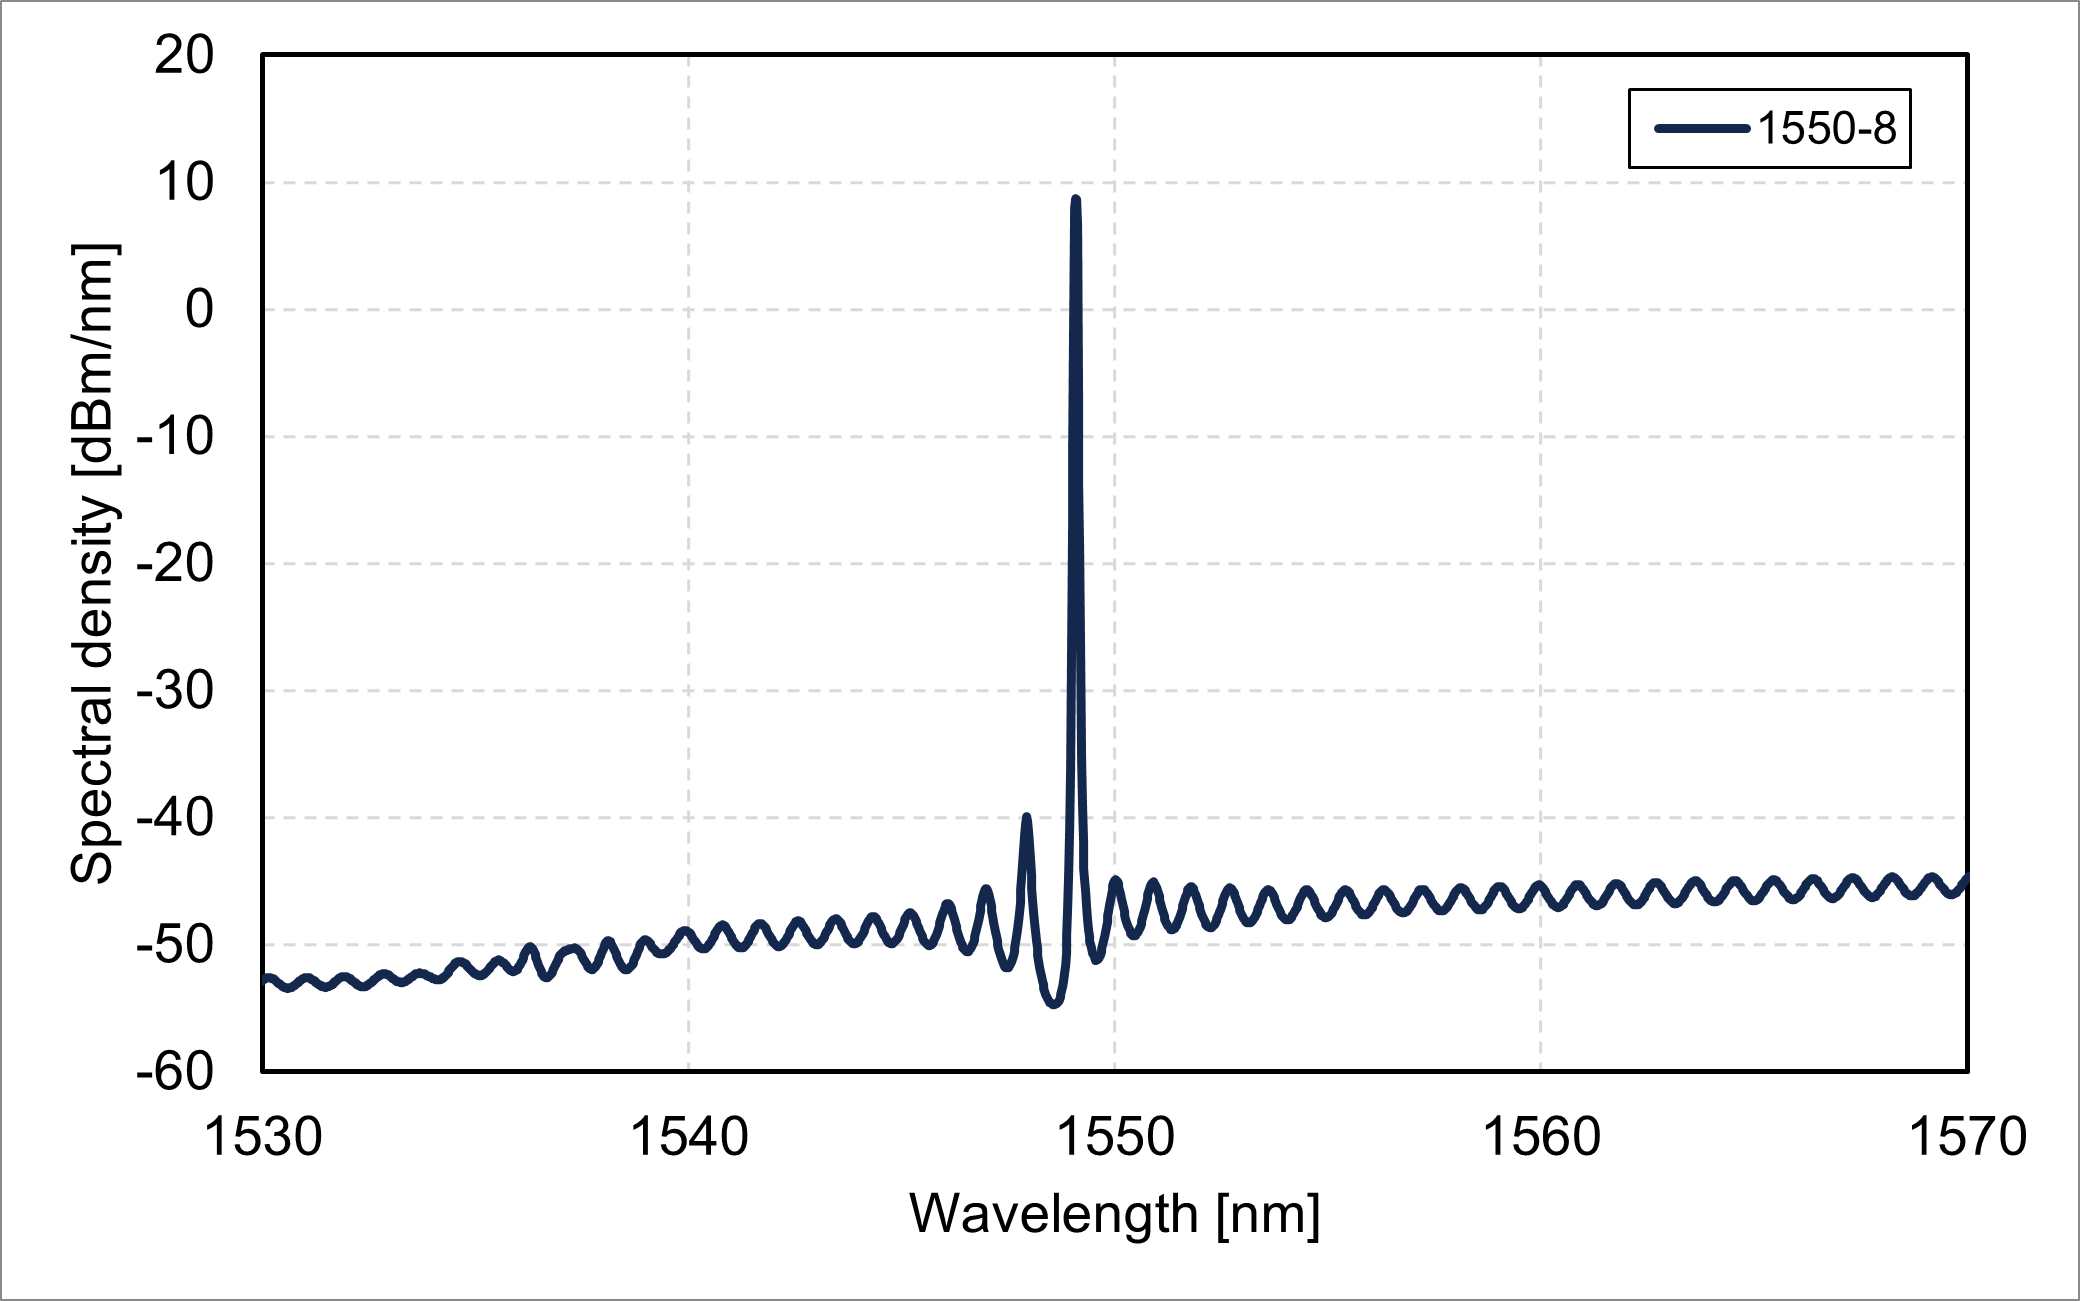 Spectral density vs. wavelength (1550-8)